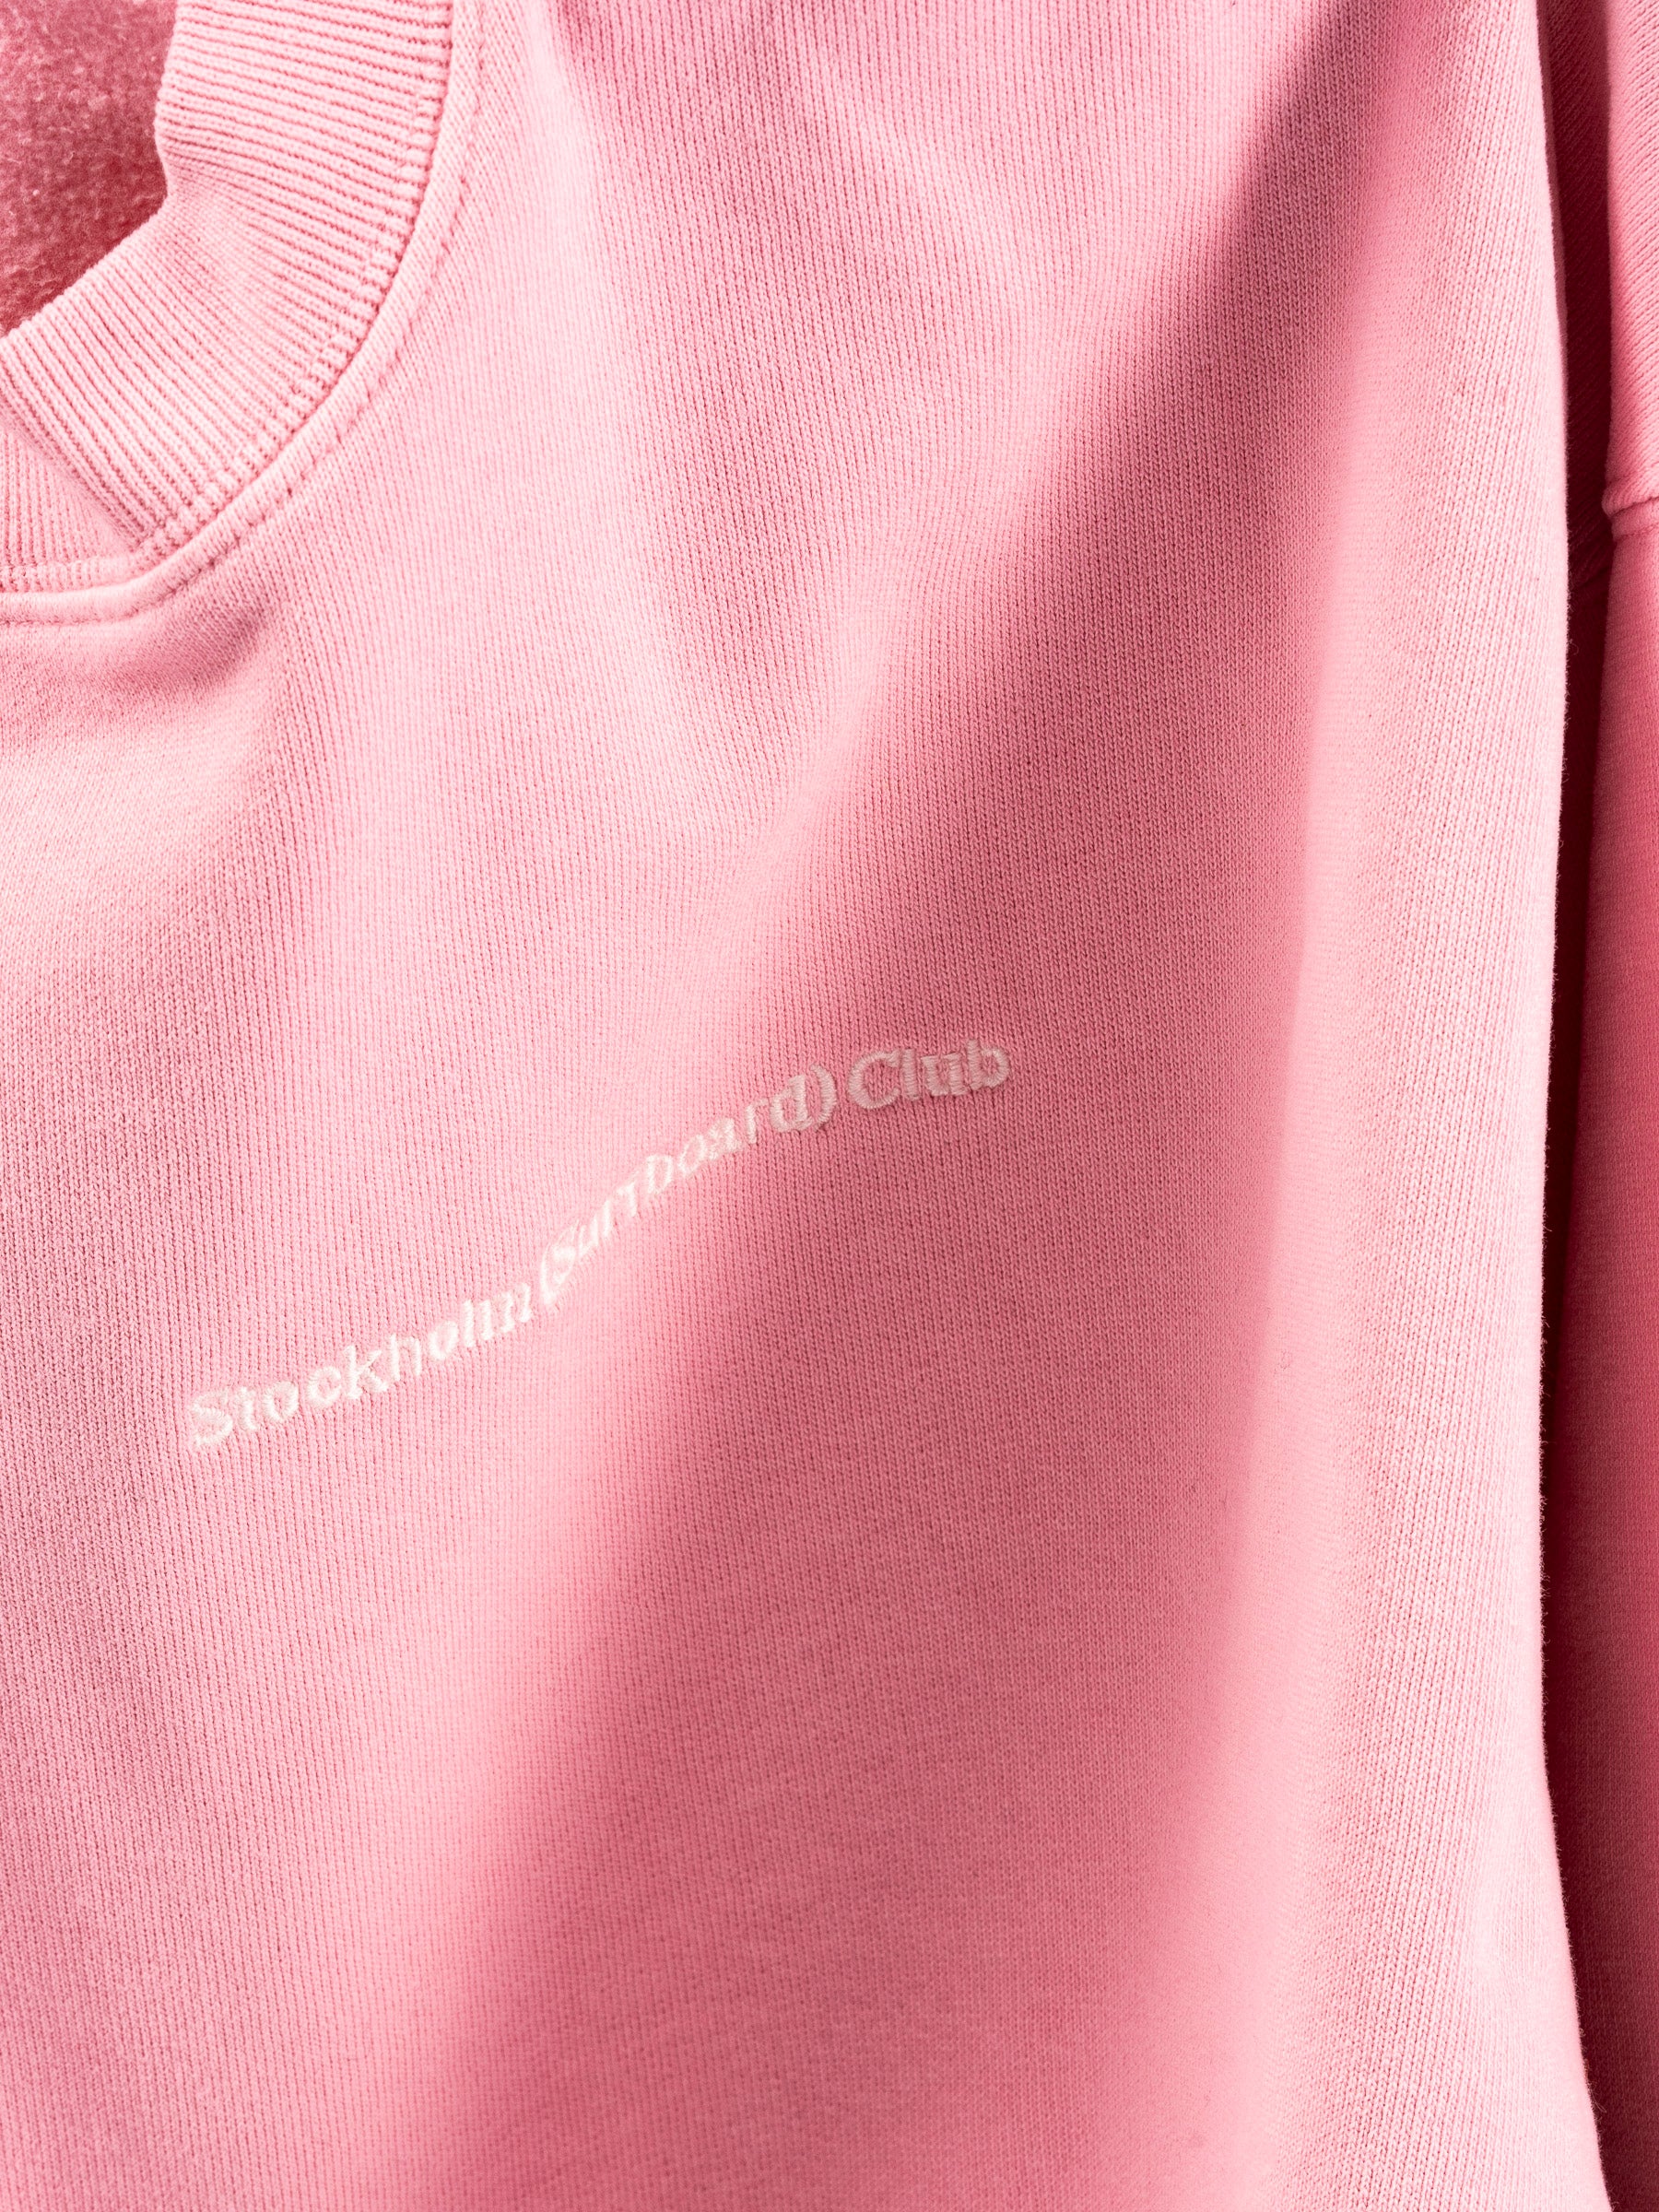 Tree Sweatshirt Pink